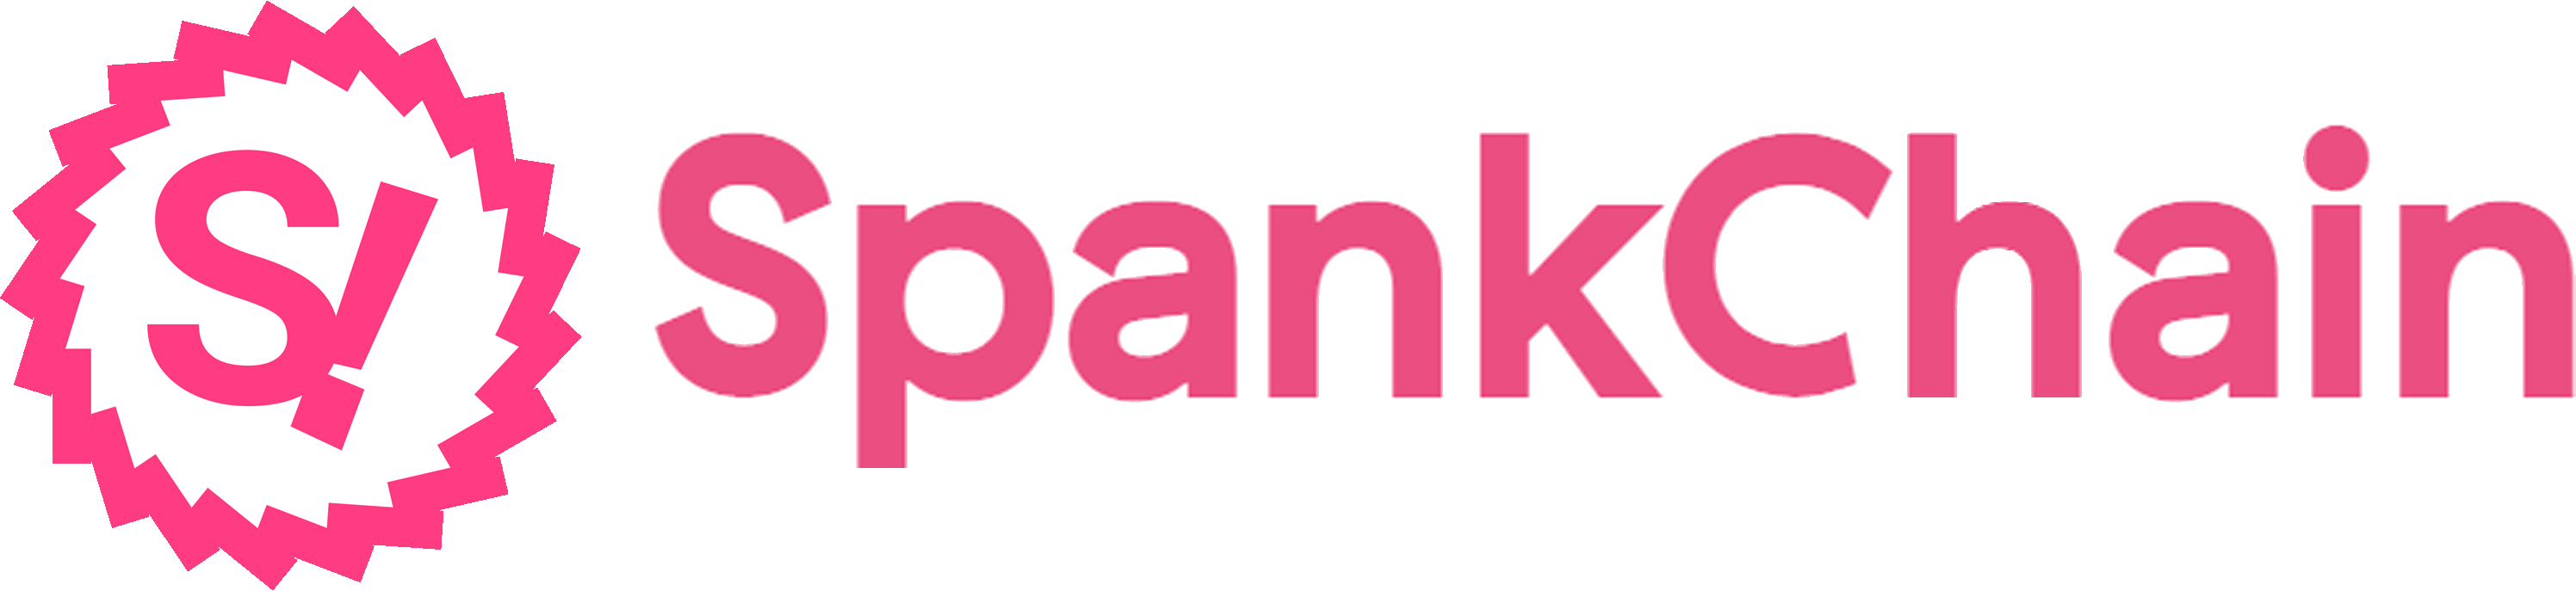 spankchain logo